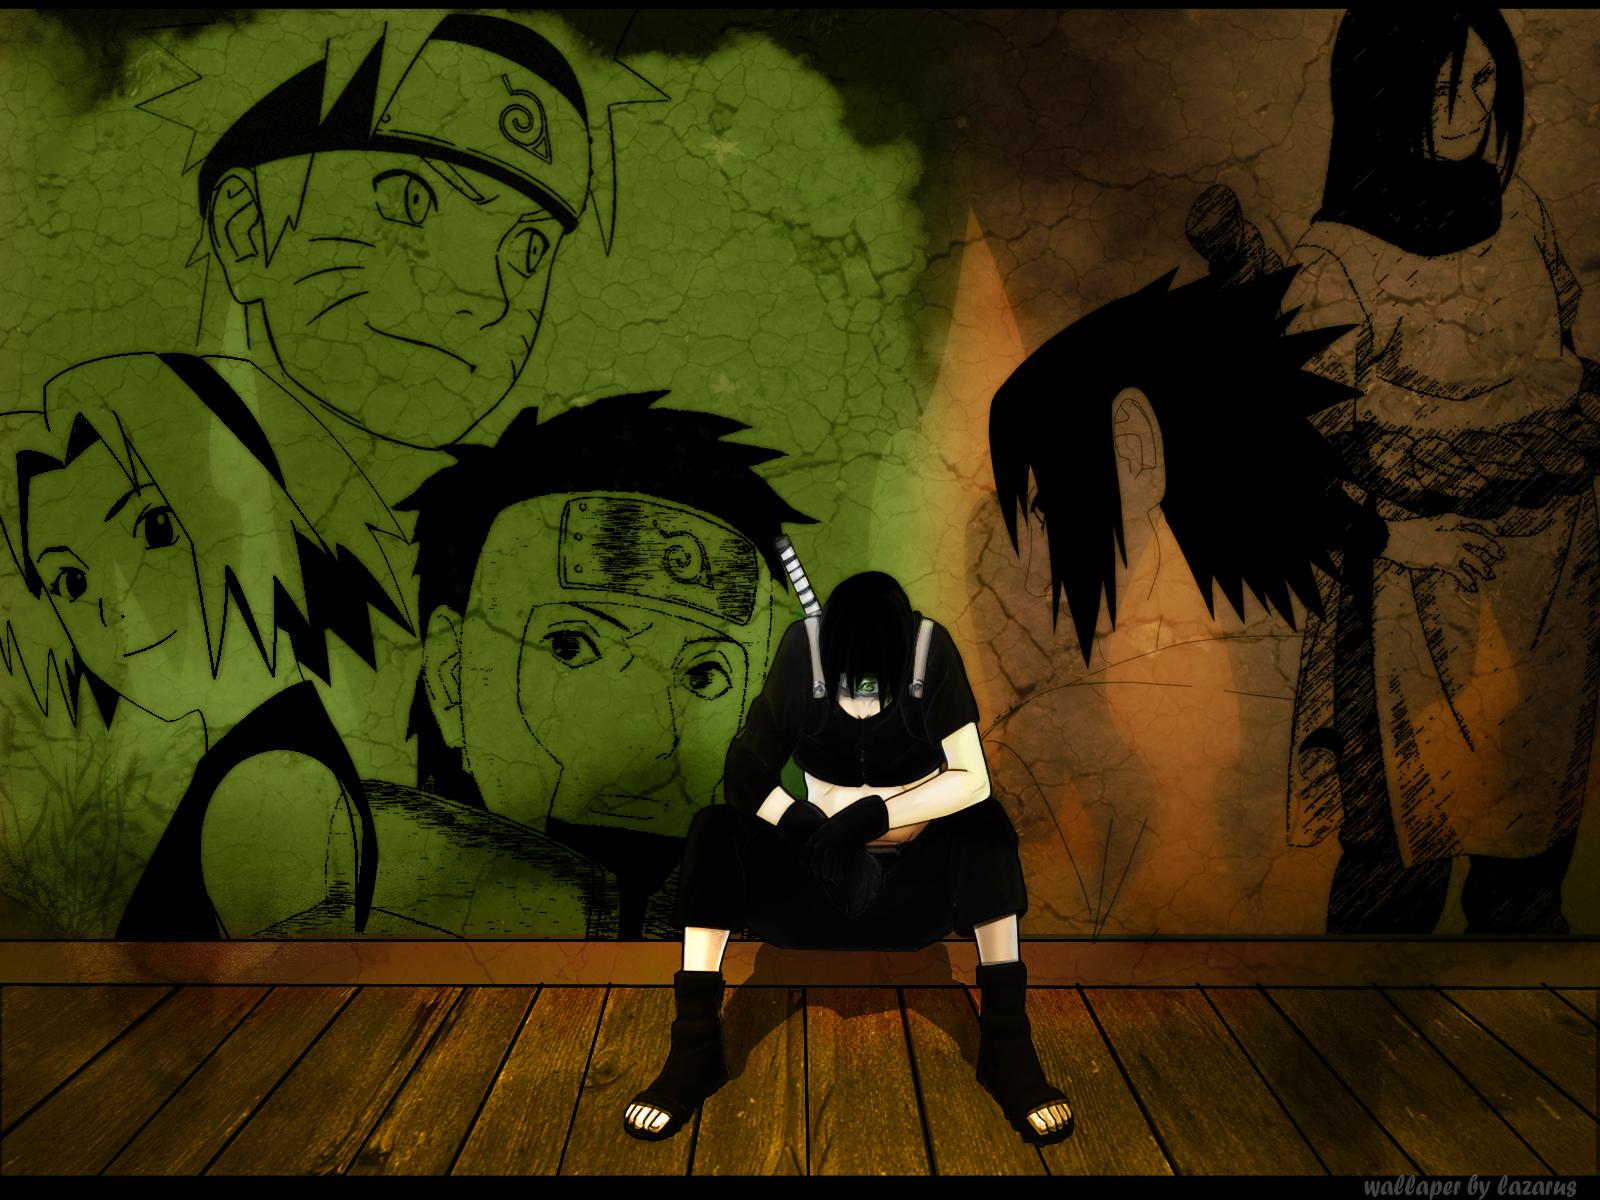 Group of Naruto characters standing together, including Naruto Uzumaki, Sakura Haruno, Yamato, Sasuke Uchiha, Orochimaru, and Sai.